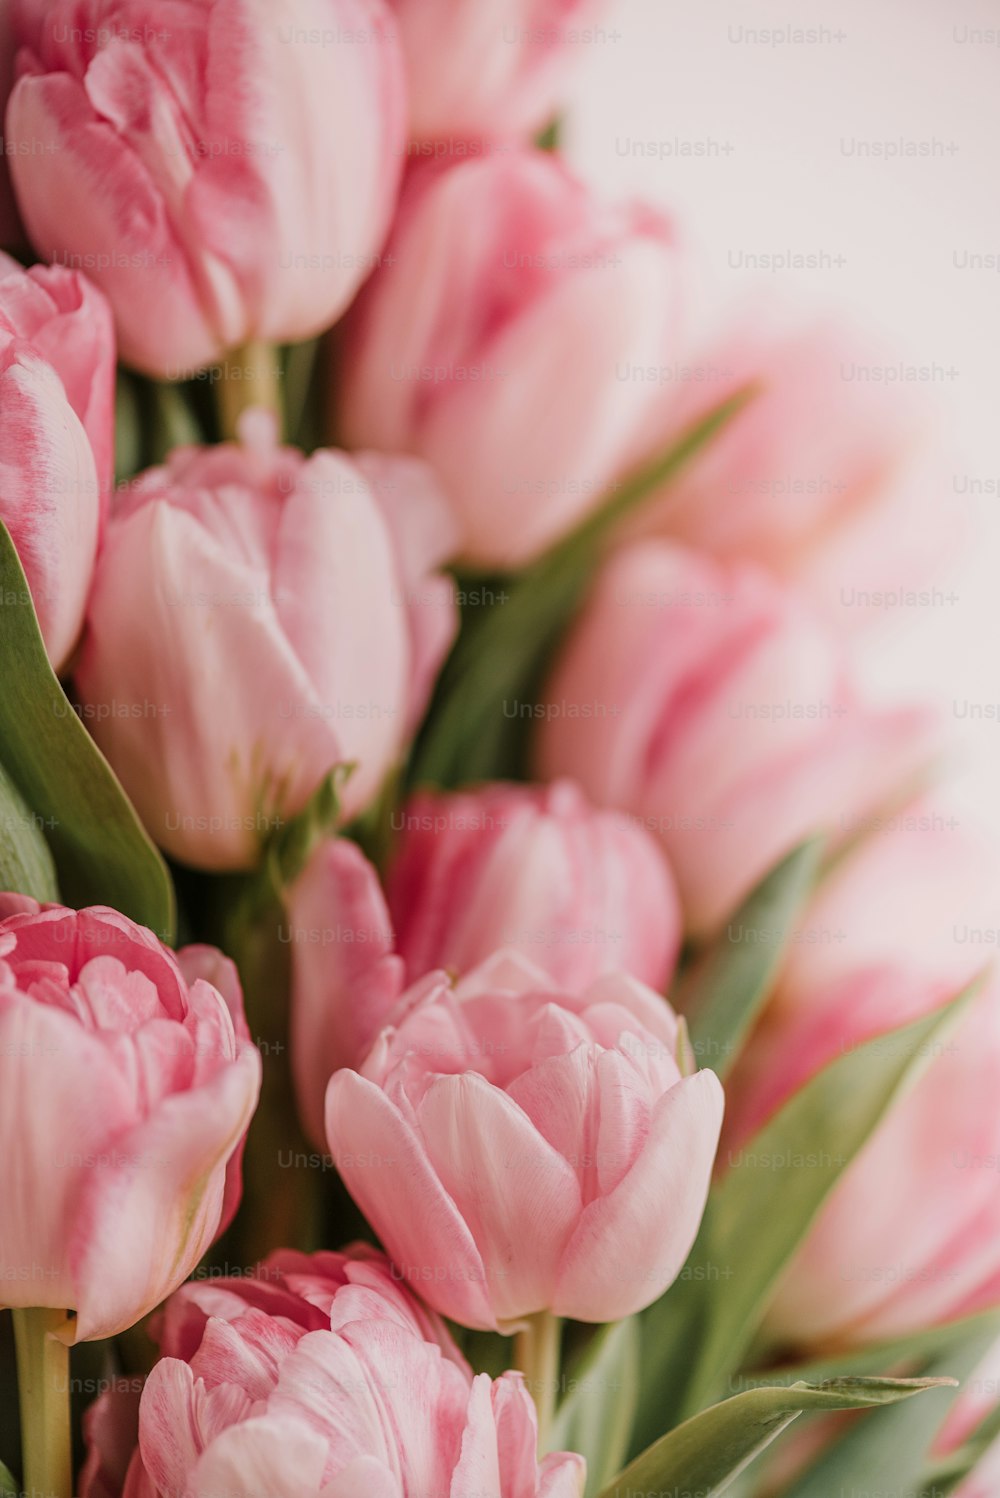 Un ramo de tulipanes rosas sobre fondo blanco